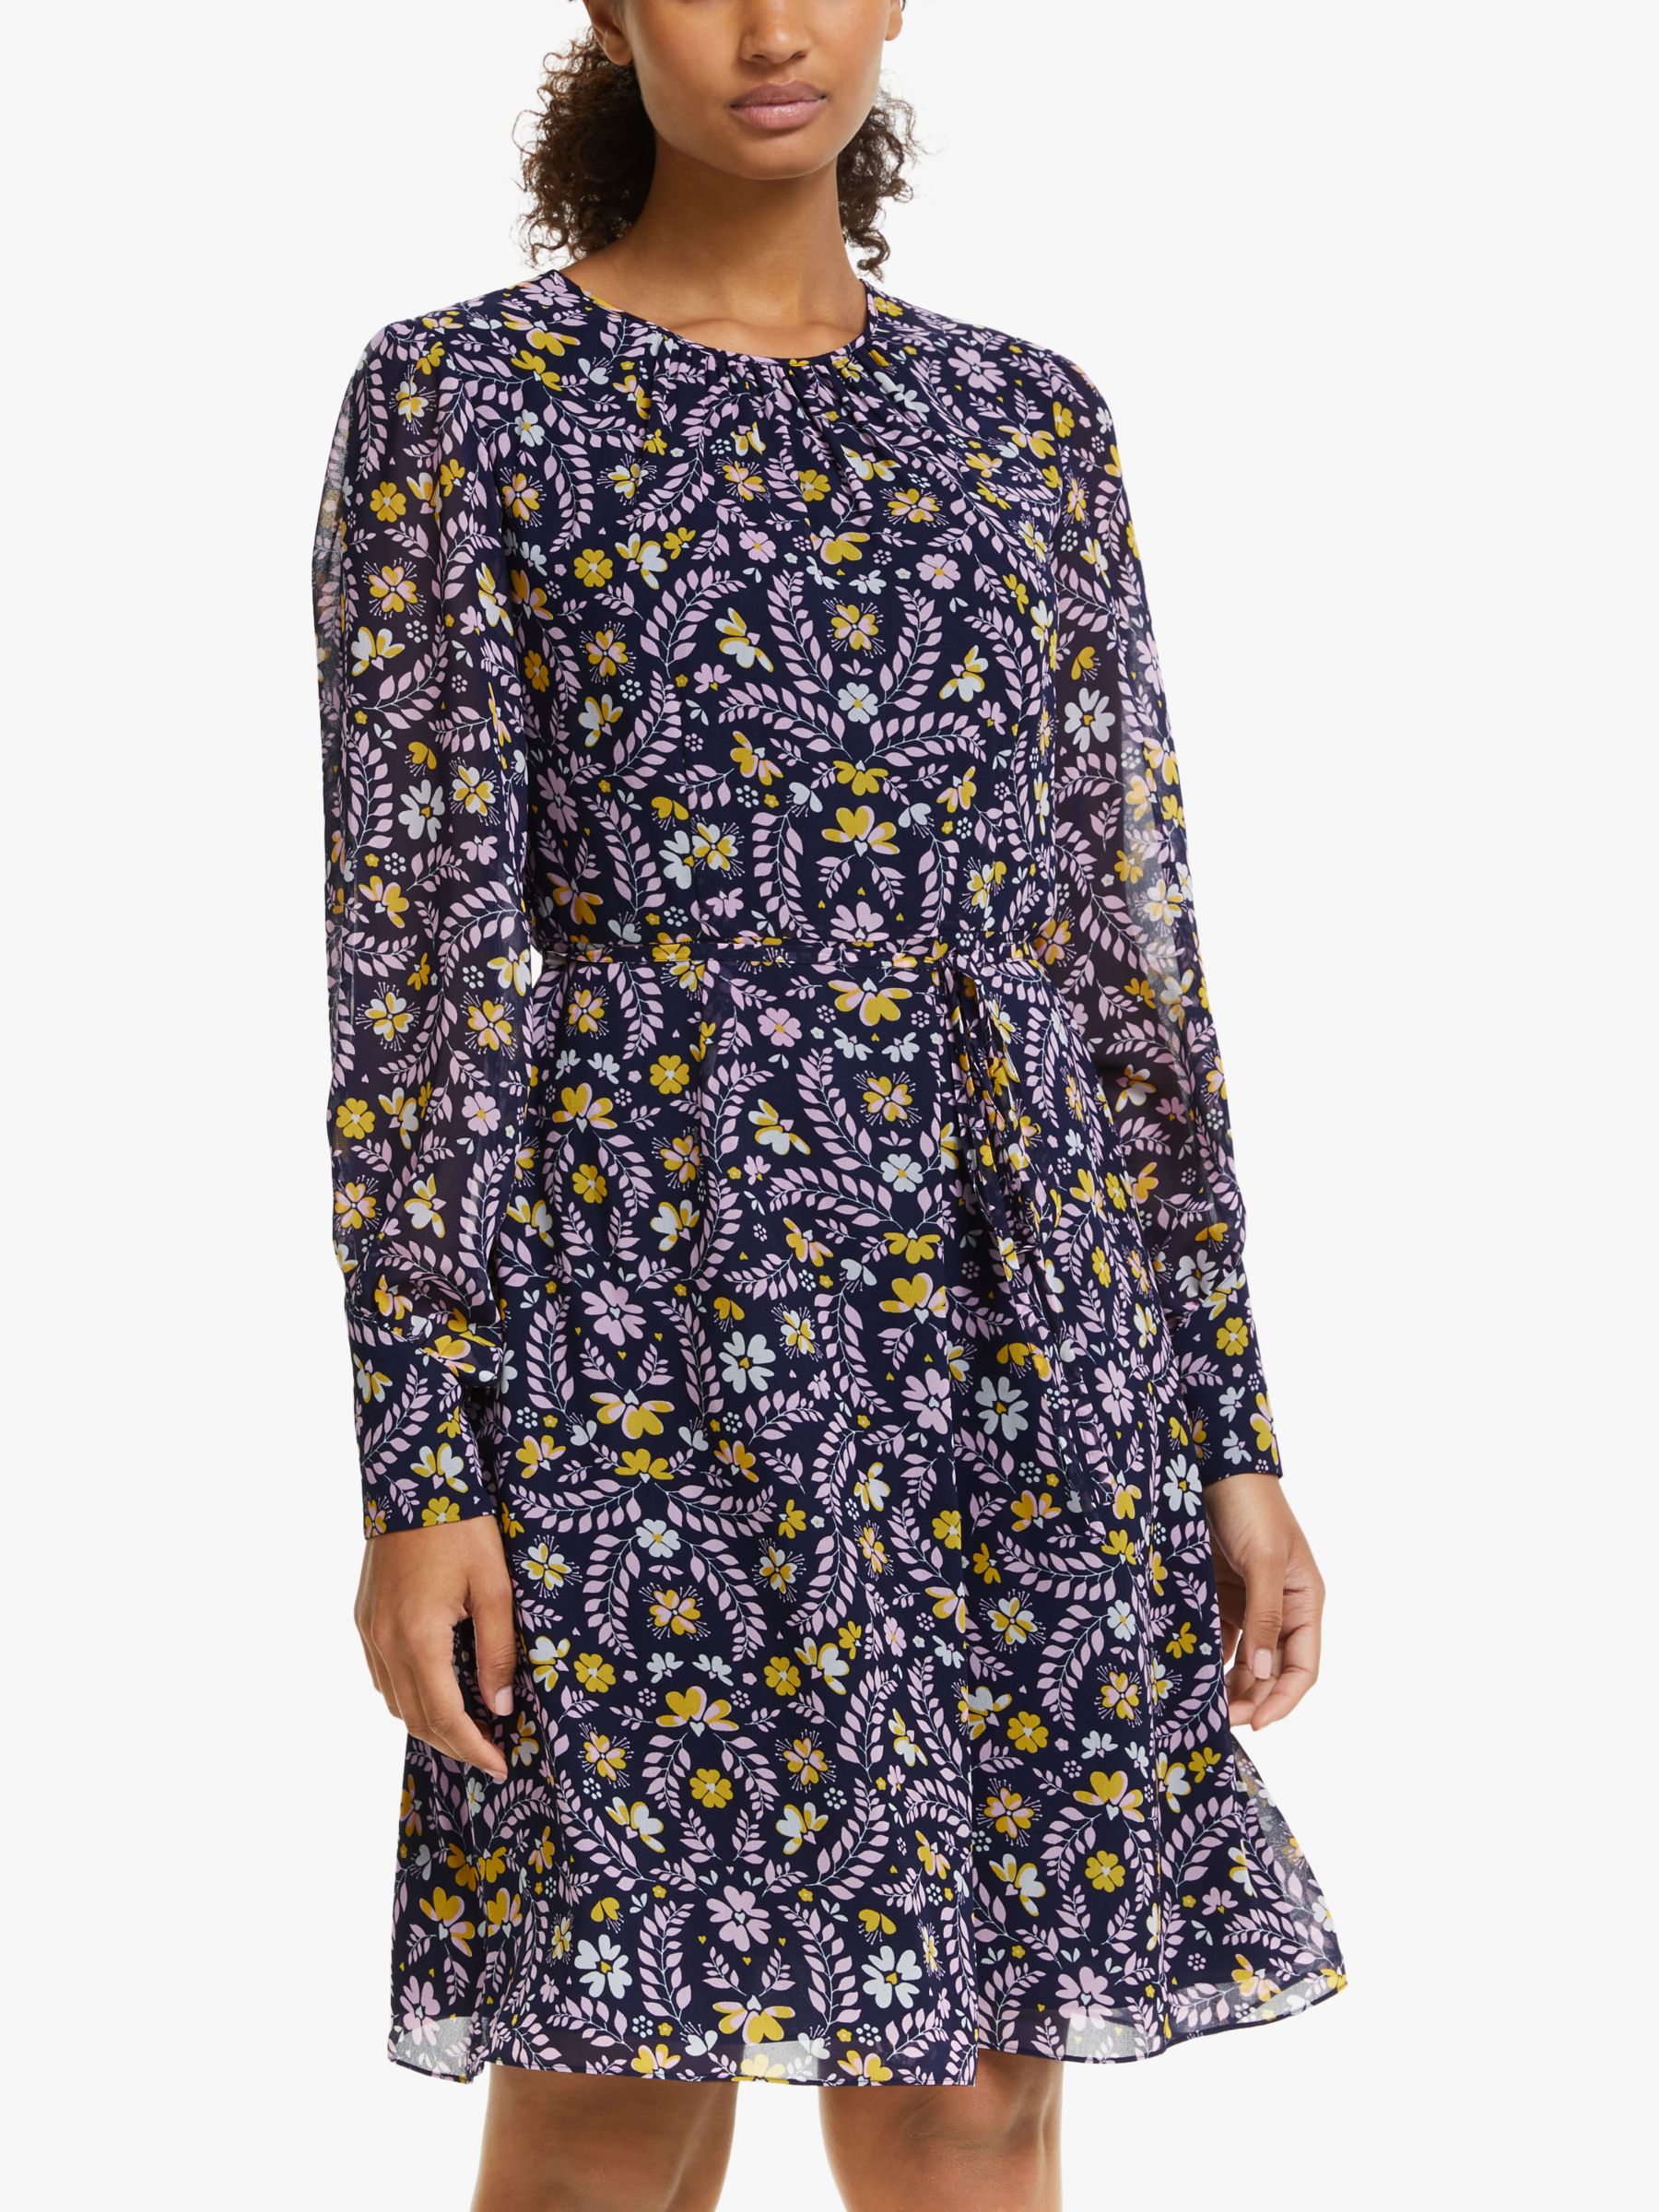 Boden Blossom Print Dress, Navy/Rosebay